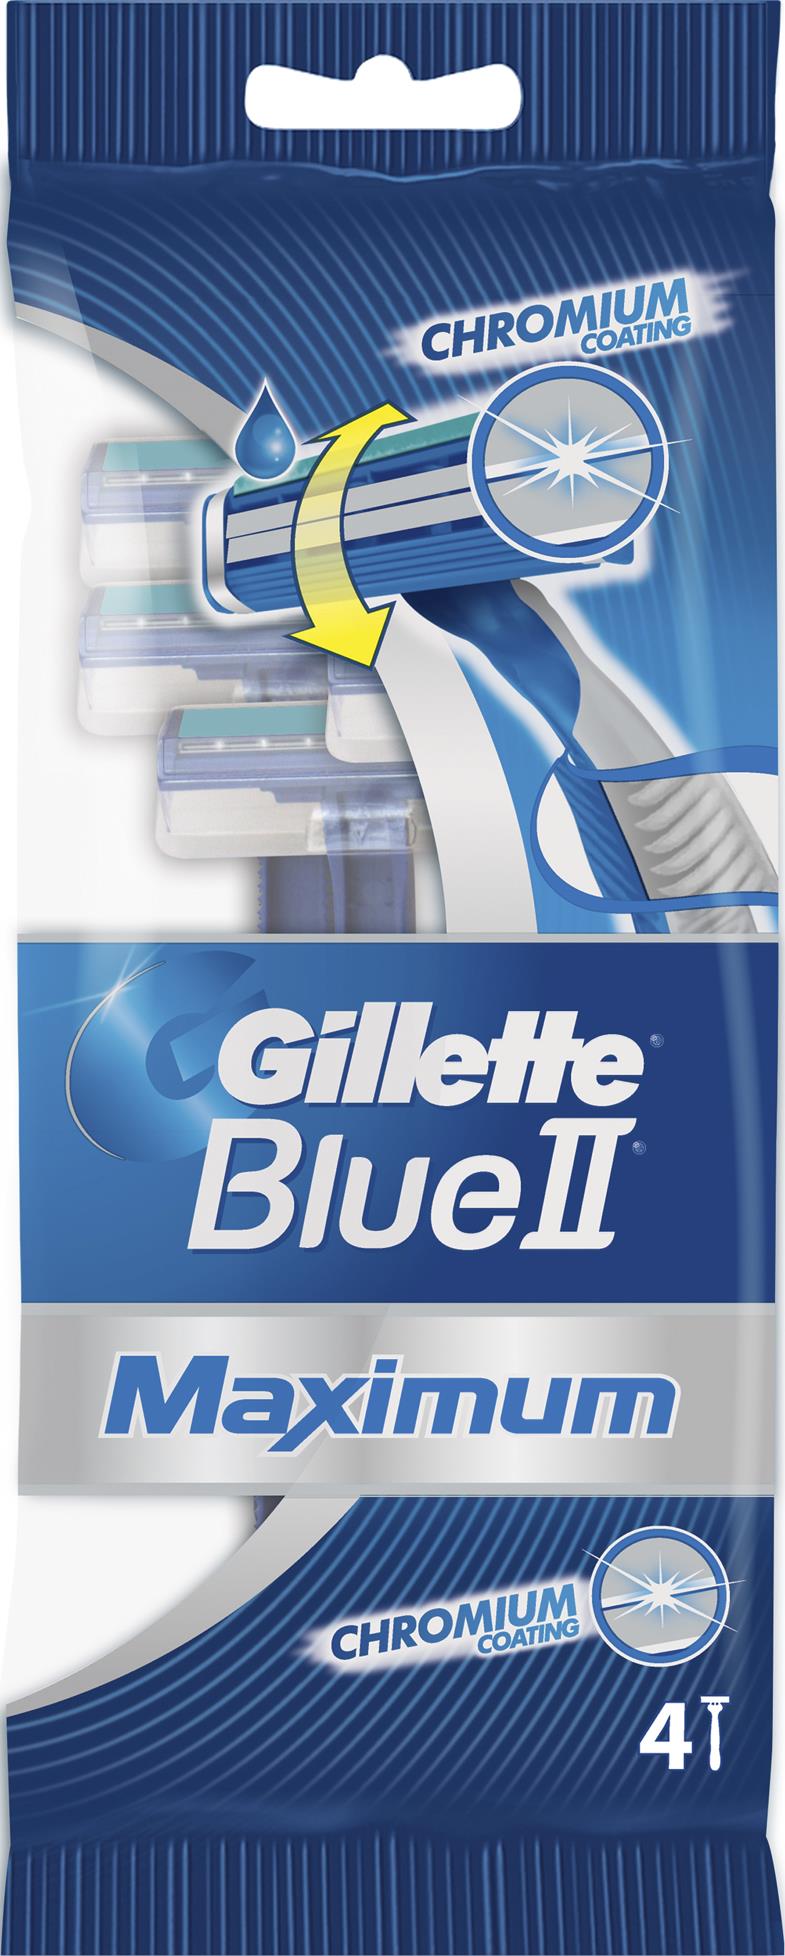 Станки Gillette Blue II Maximum бритвенные одноразовые